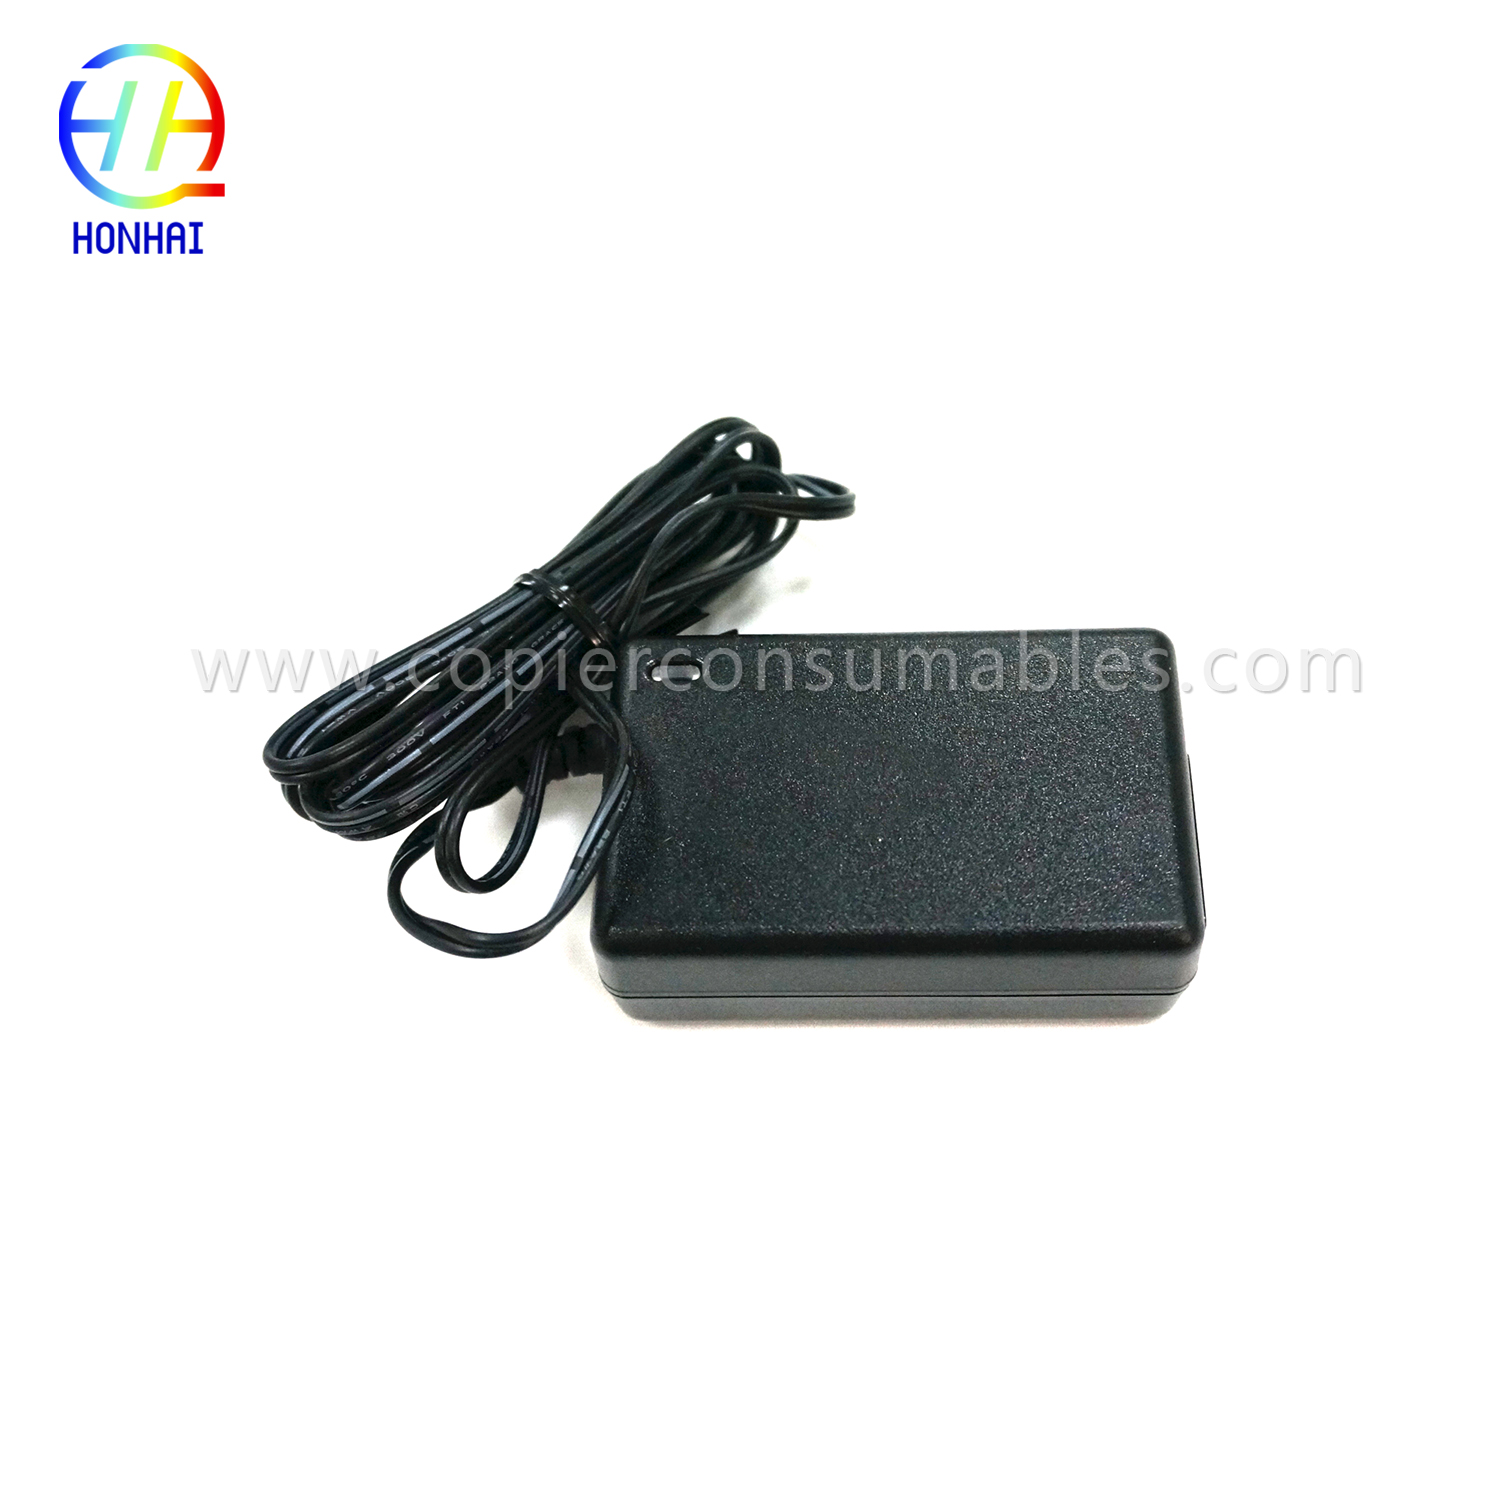 AC Power Adapter Charger for HP Deskjet 1000 1050 2000 2050 2060 2010 0957-2286 30V 333mA